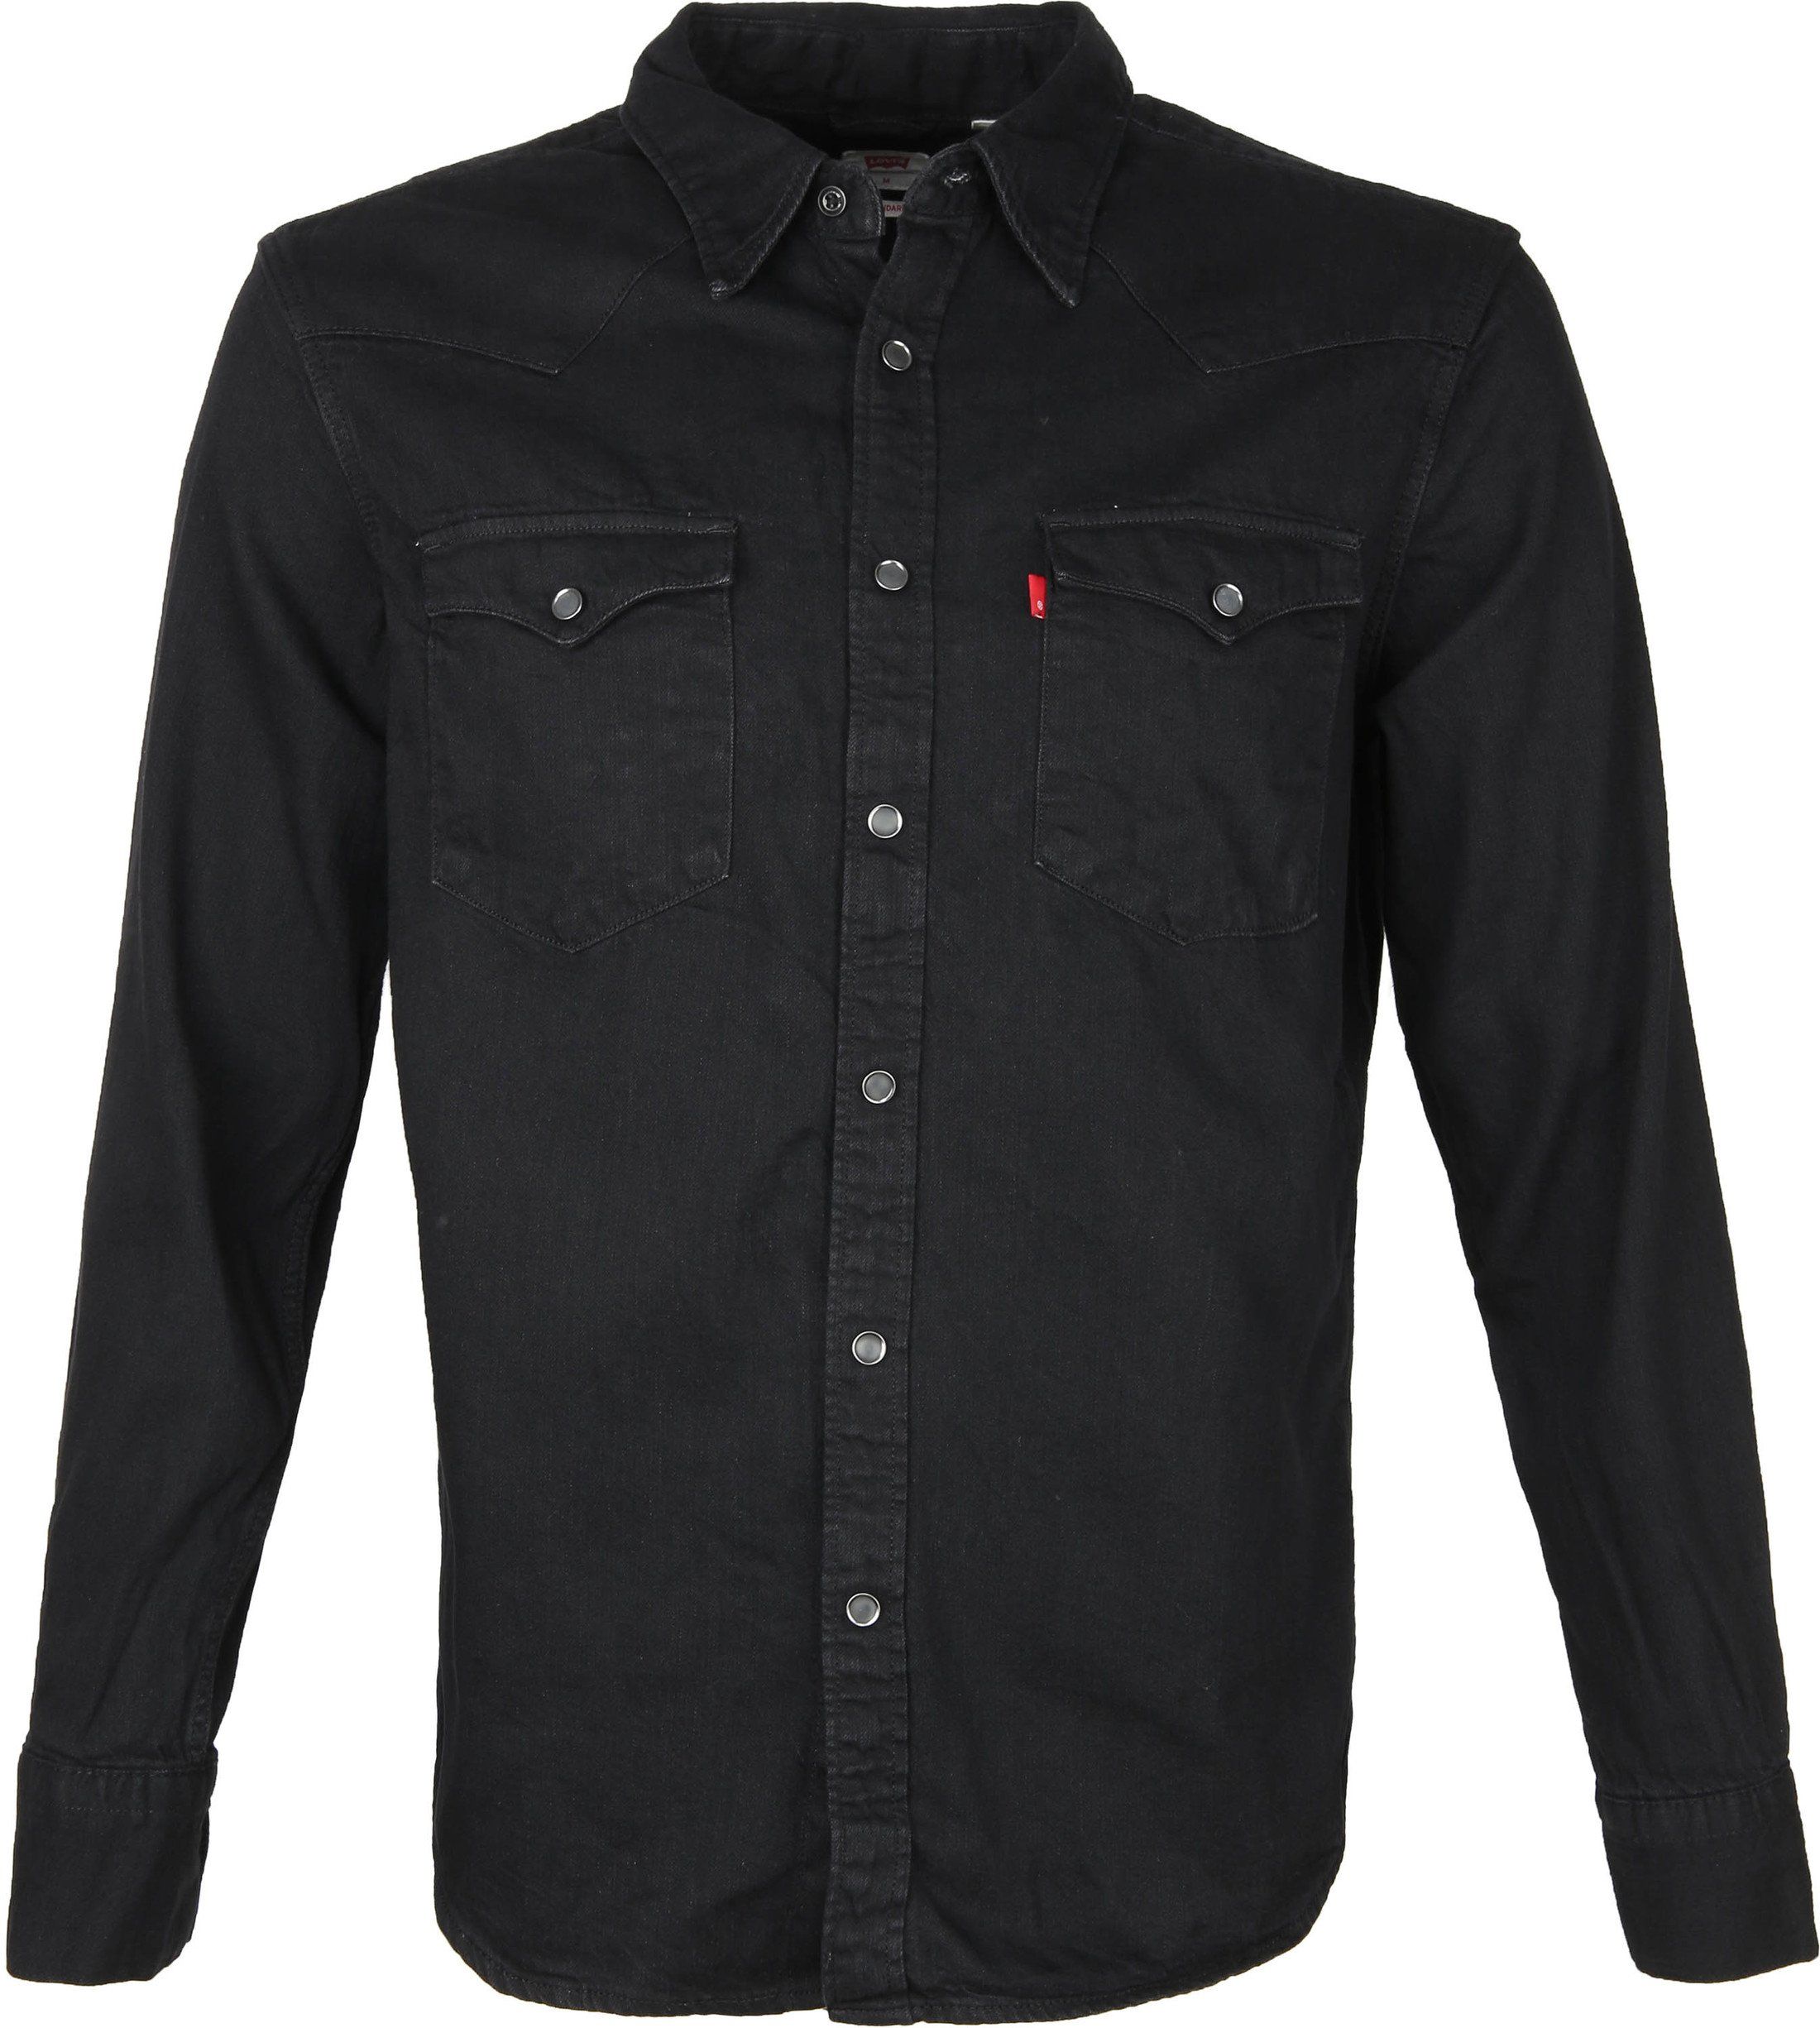 Levi's Barstow Shirt Black size M